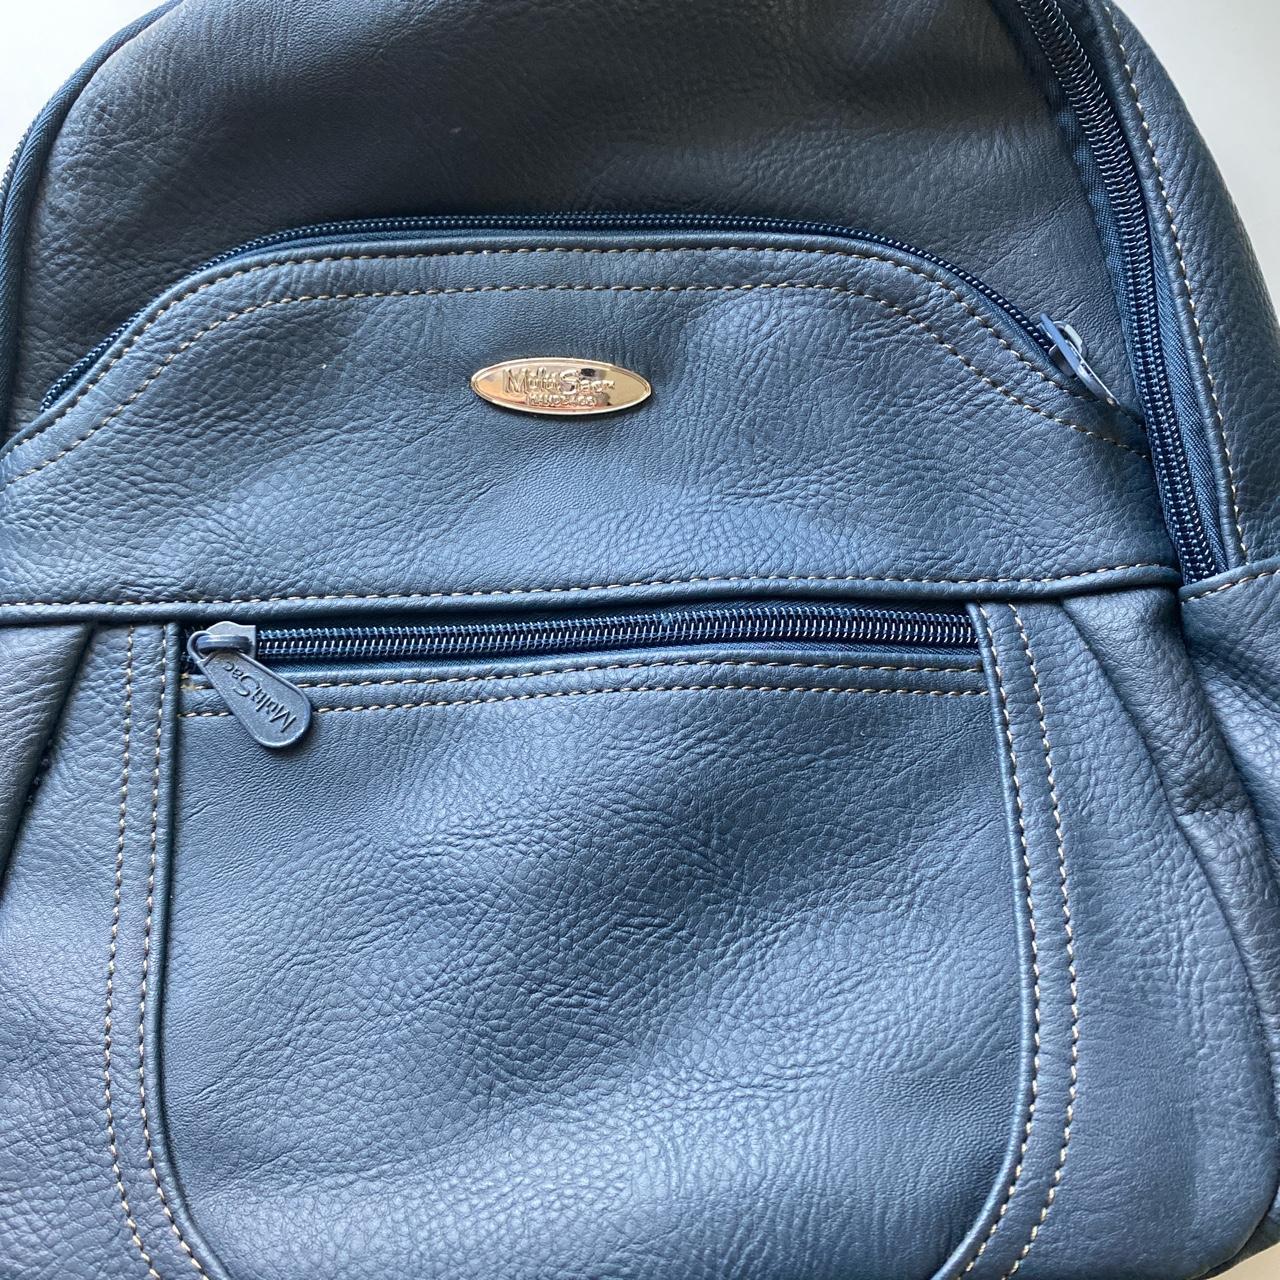 MultiSac mini backpack 🫐has a zipper so it can be - Depop